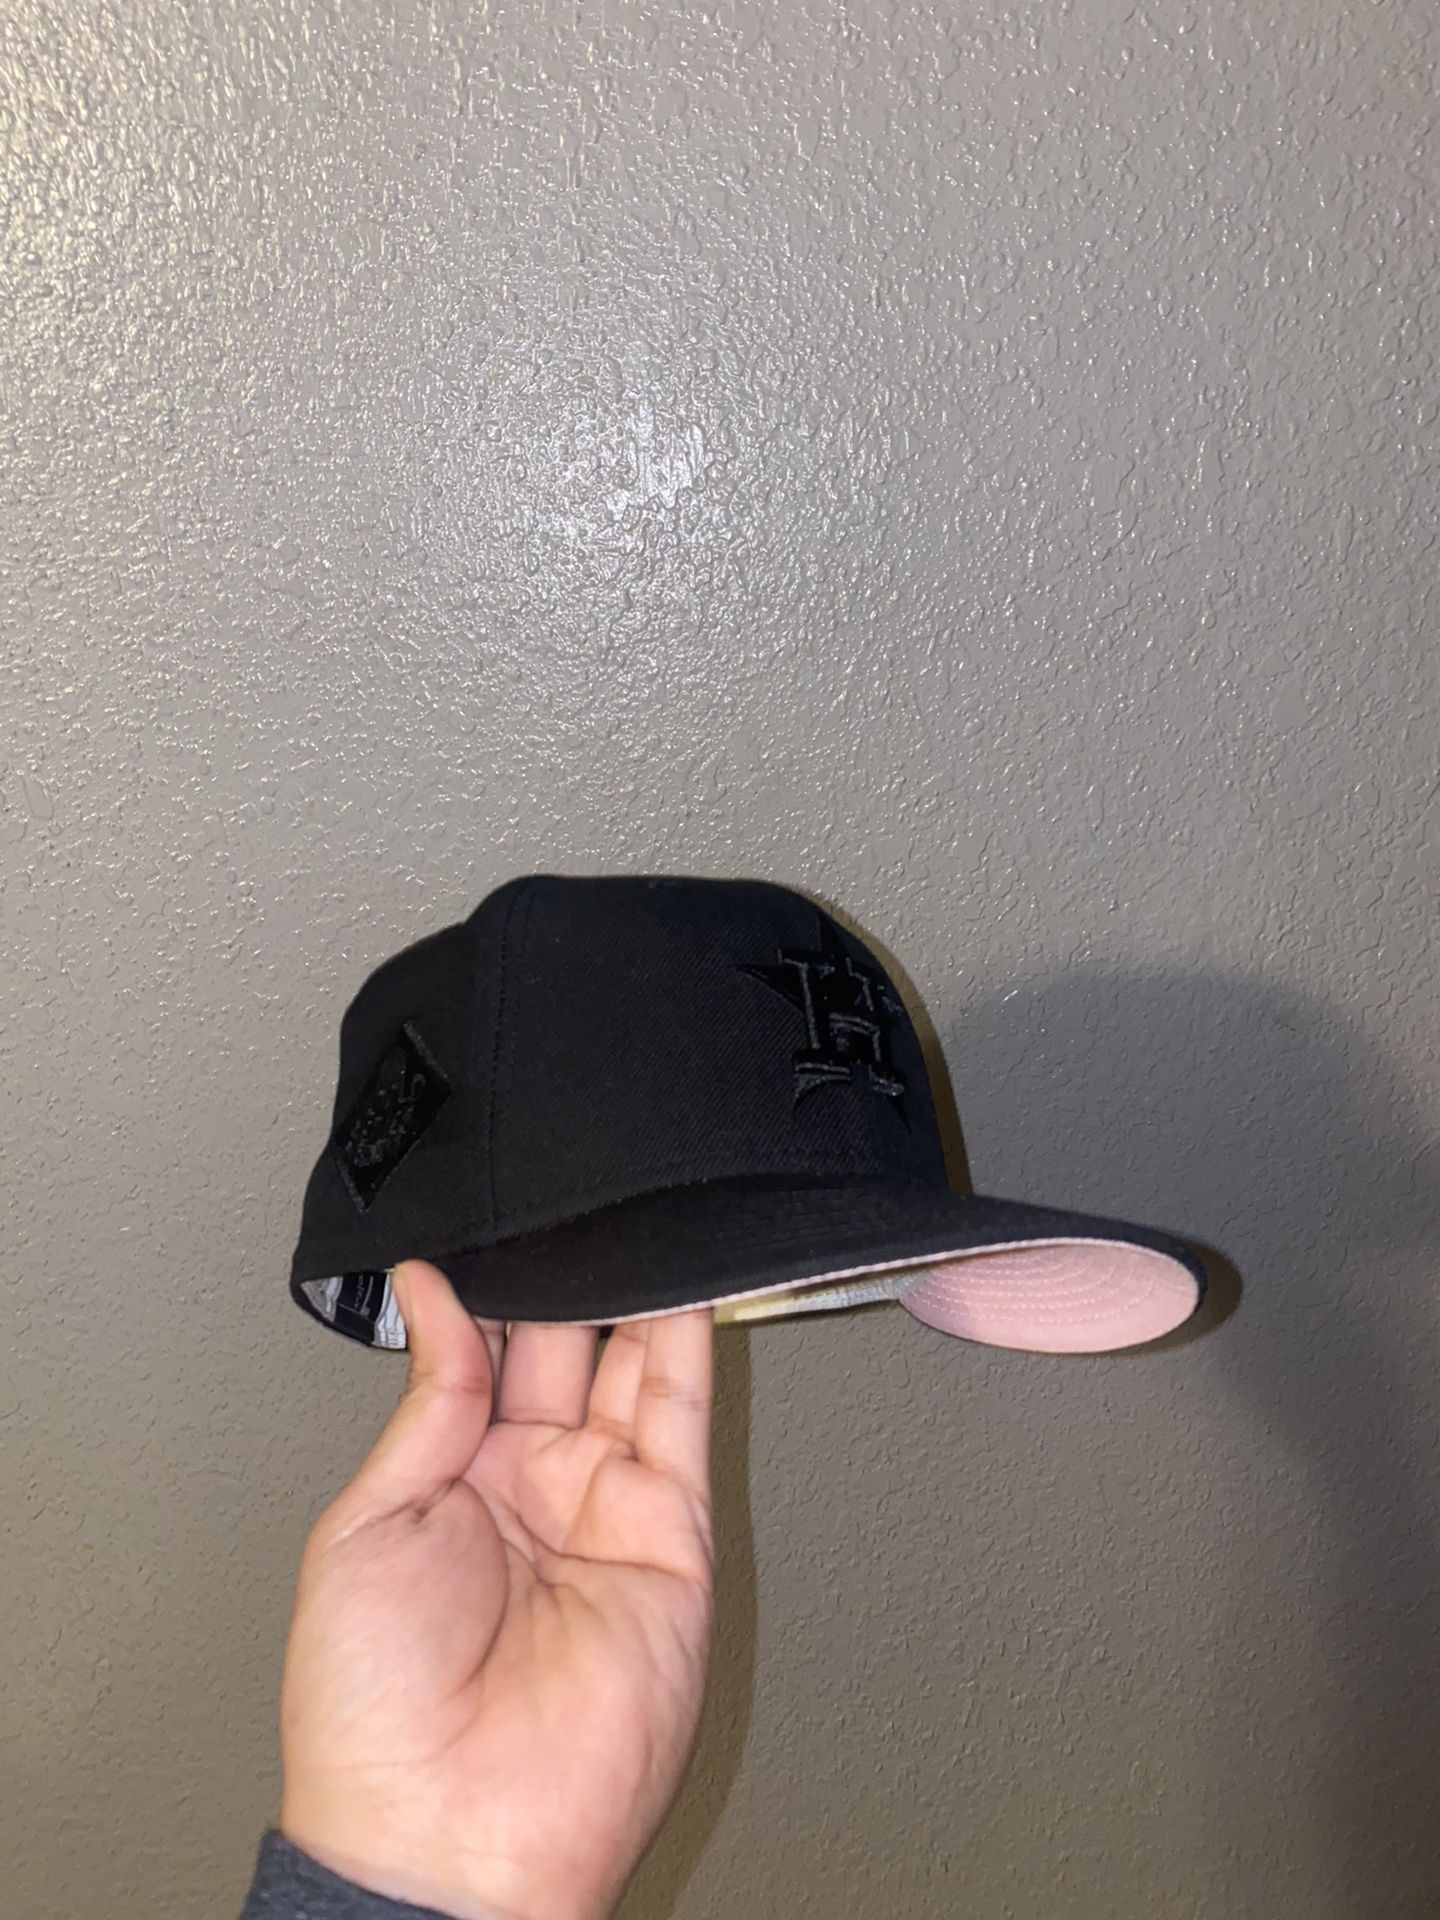 Astros 2017 WS 7 5/8 New Era Hat